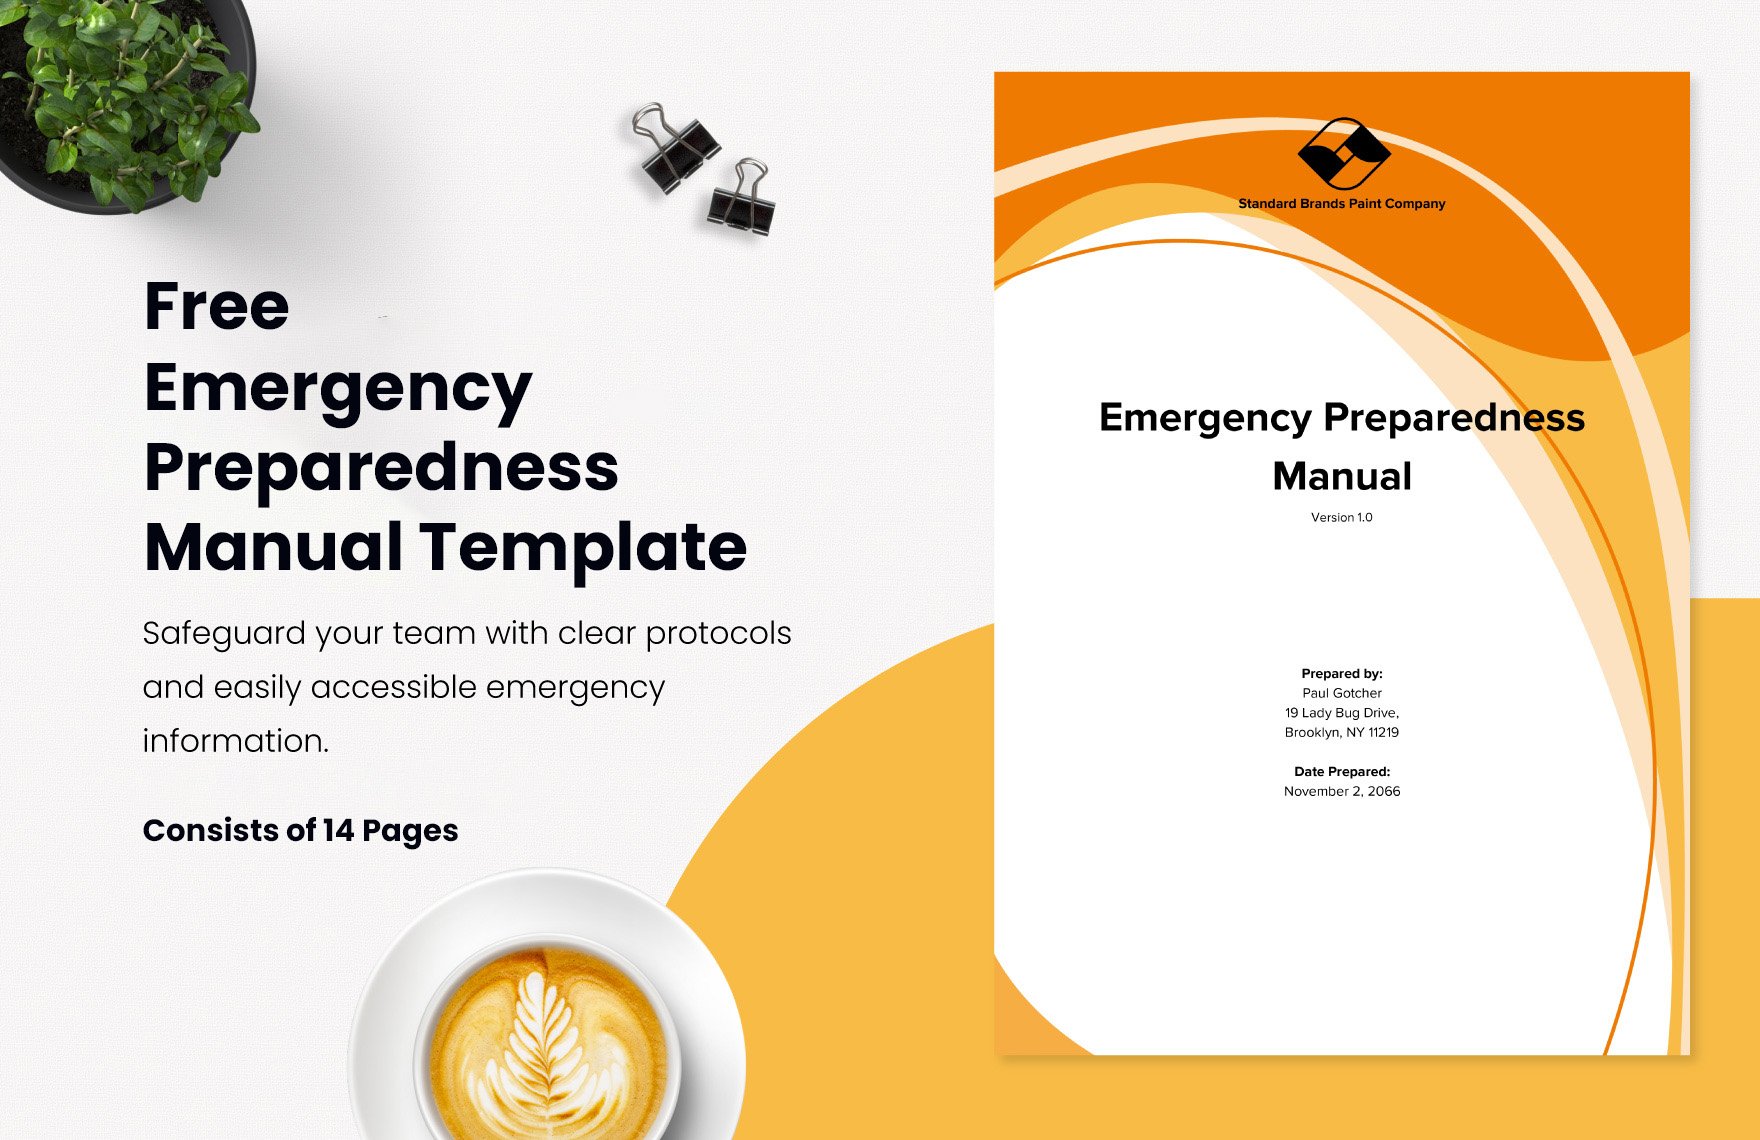 Free Emergency Preparedness Manual Template